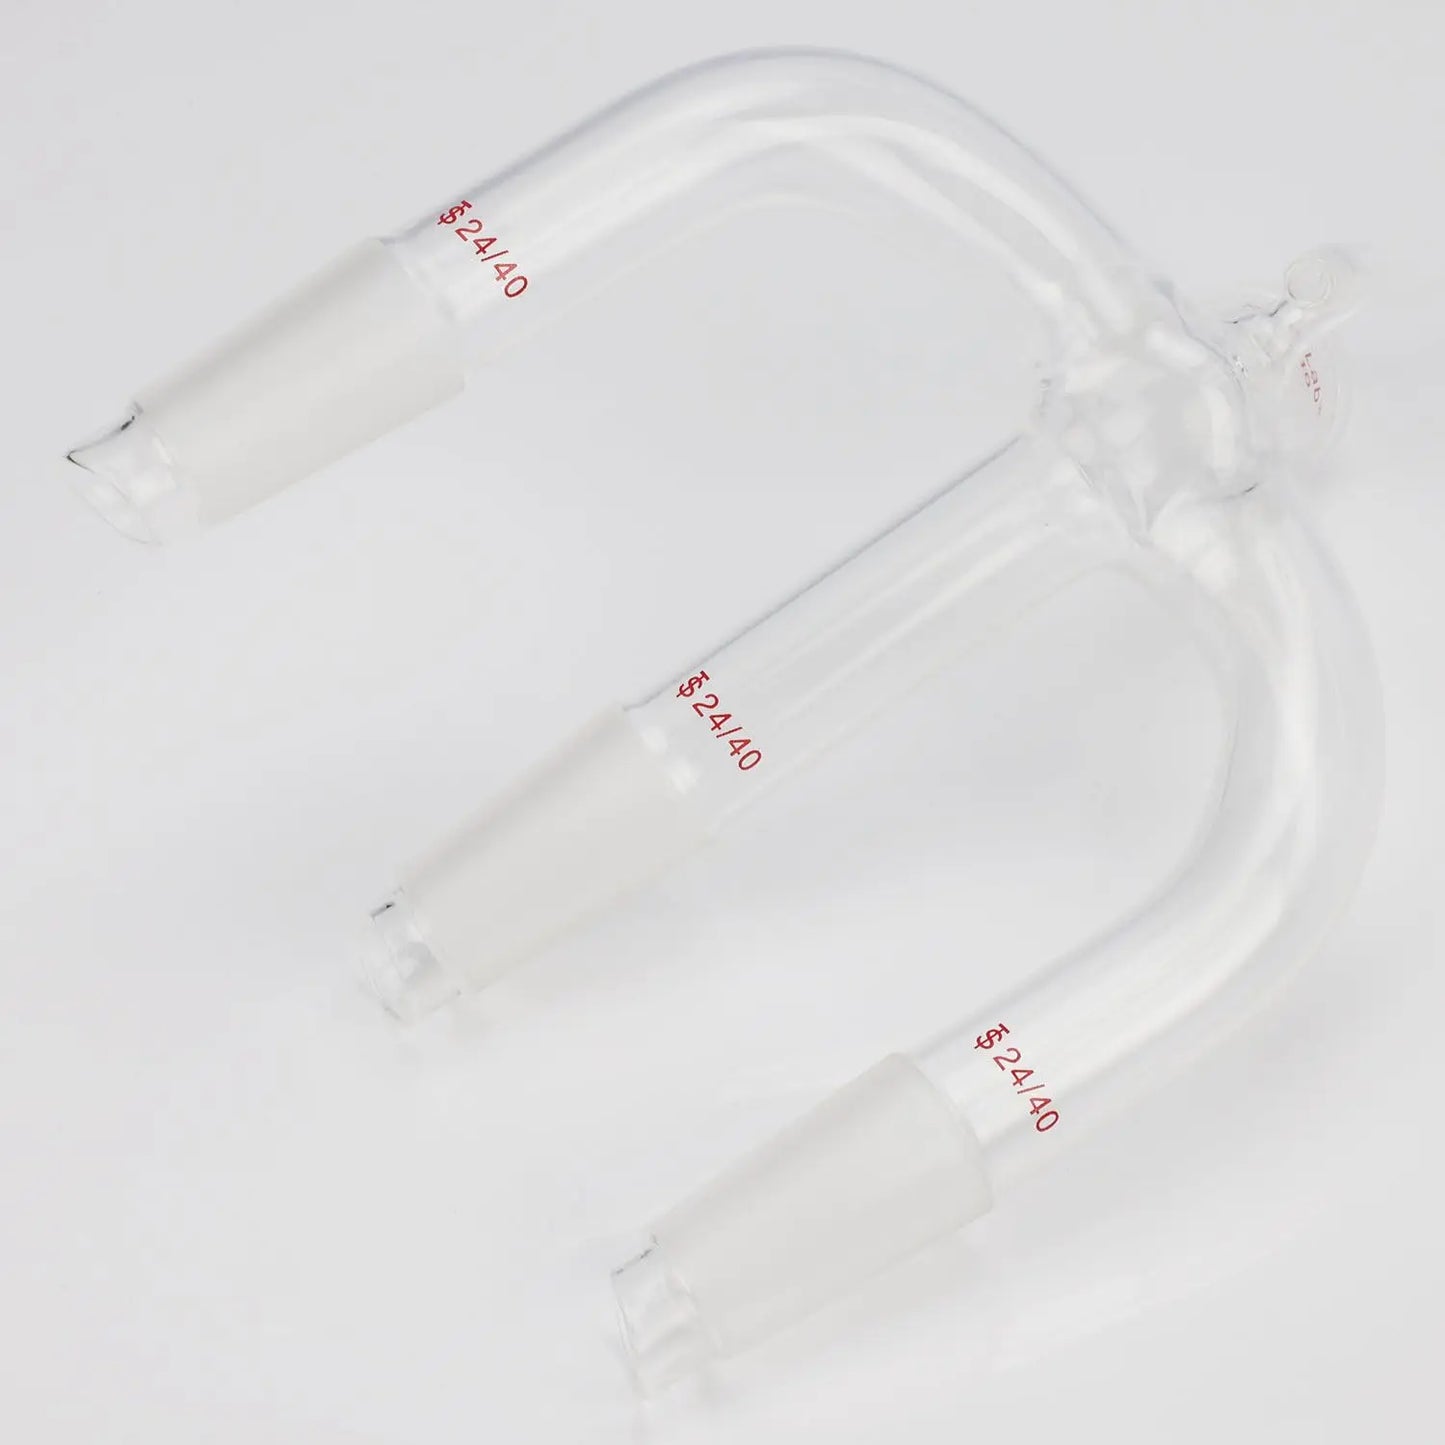 Glass Vacuum Receiving Adapter Distilling Adapters